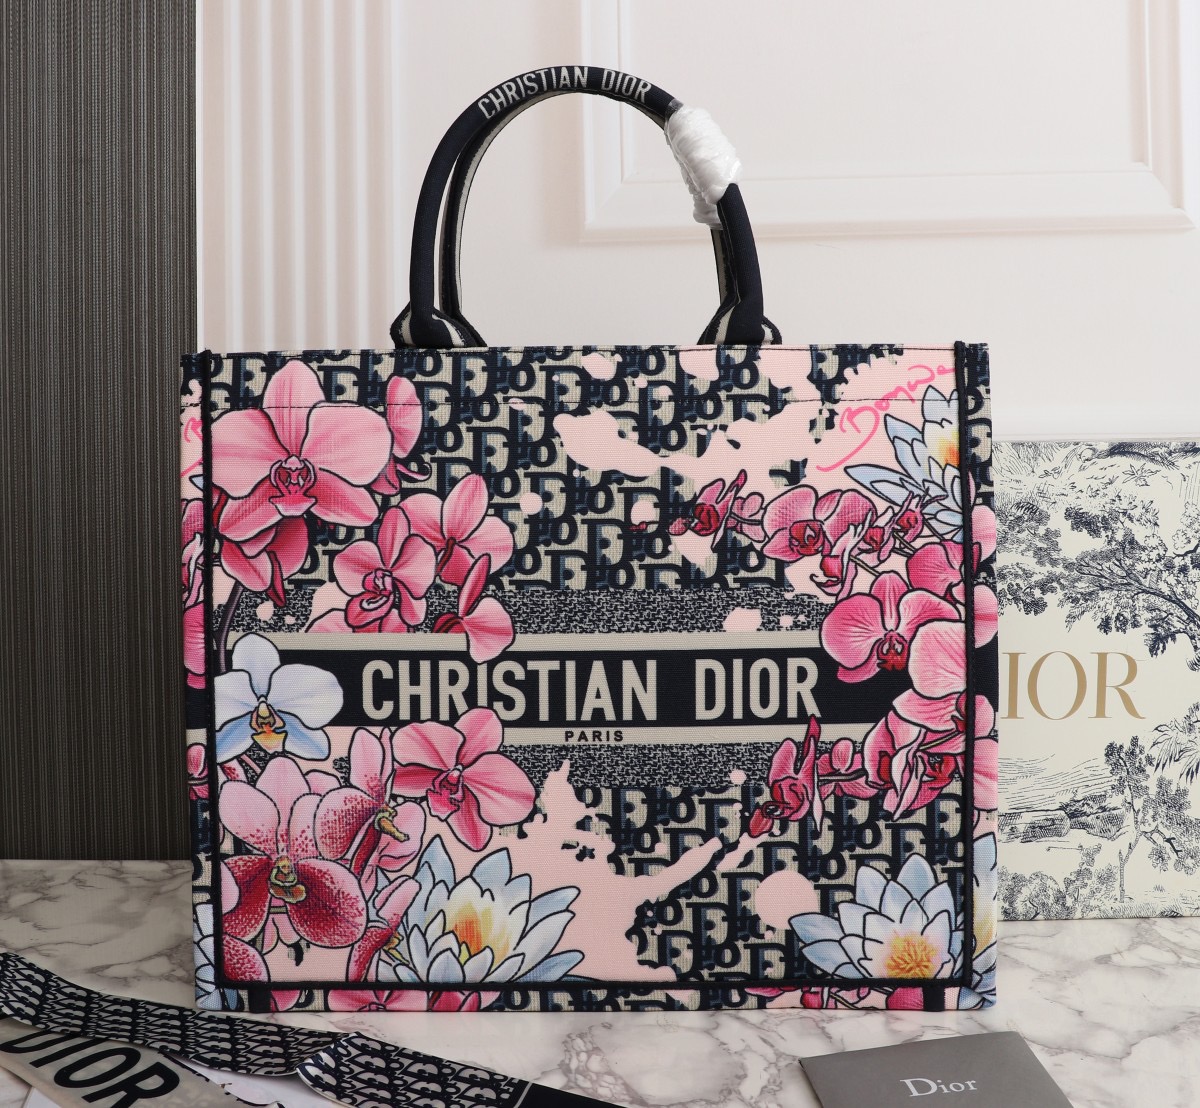 2021 Dior Handbag For Women # 244228, cheap Dior Handbags, only $99!